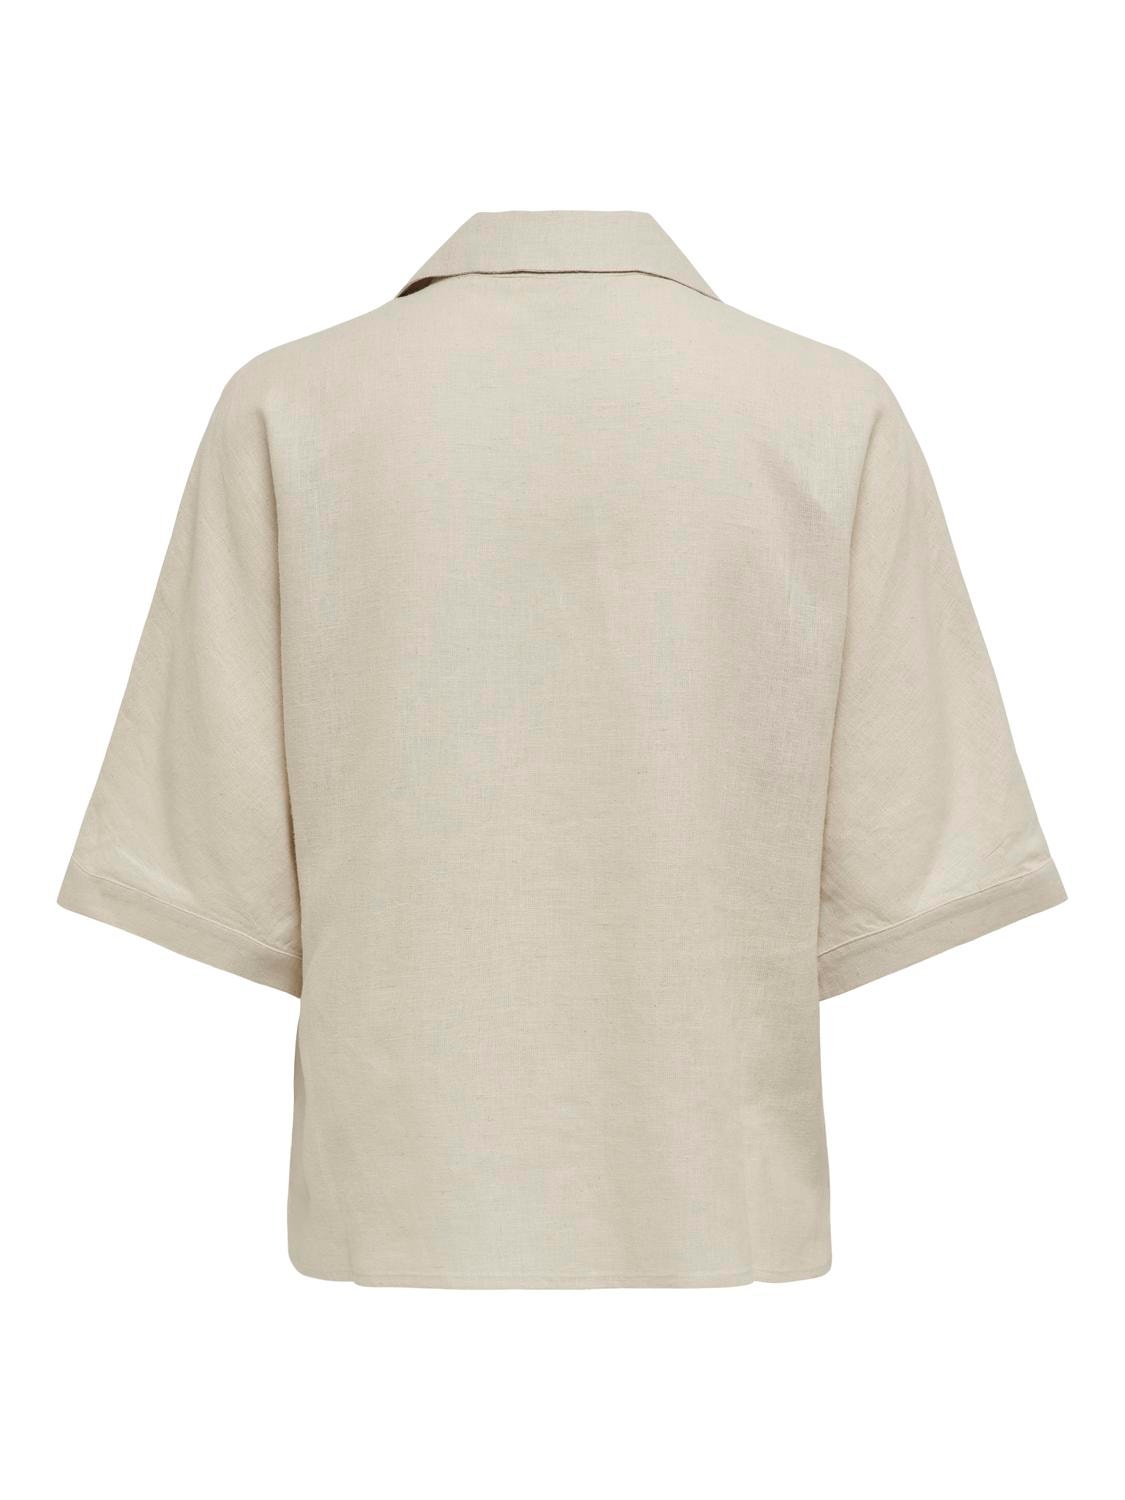 ONLY Camisas Corte regular Cuello de camisa Mangas voluminosas -Moonbeam - 15314215